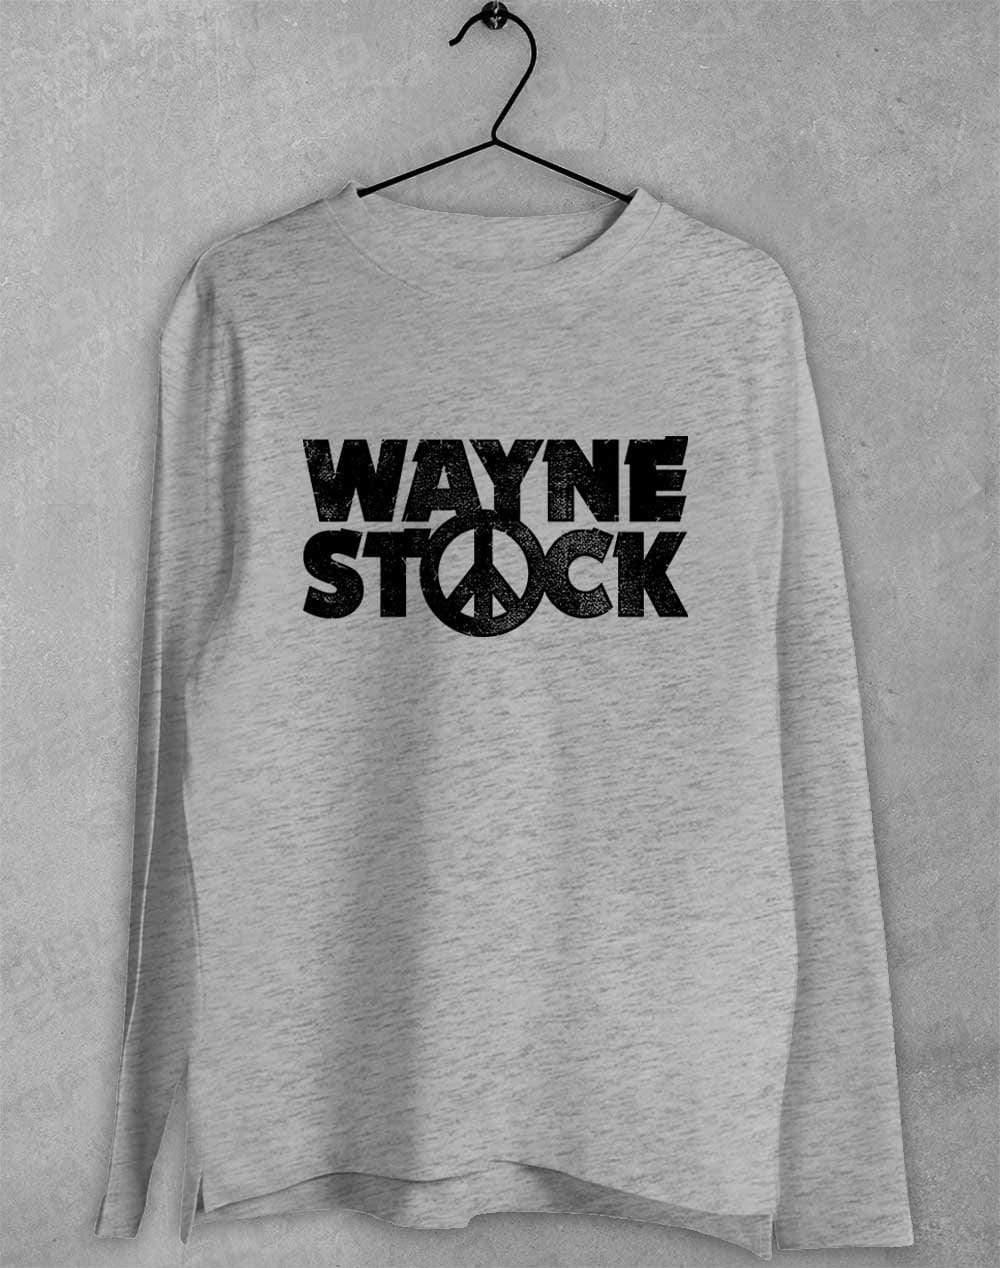 Waynestock Long Sleeve T-Shirt S / Sport Grey  - Off World Tees